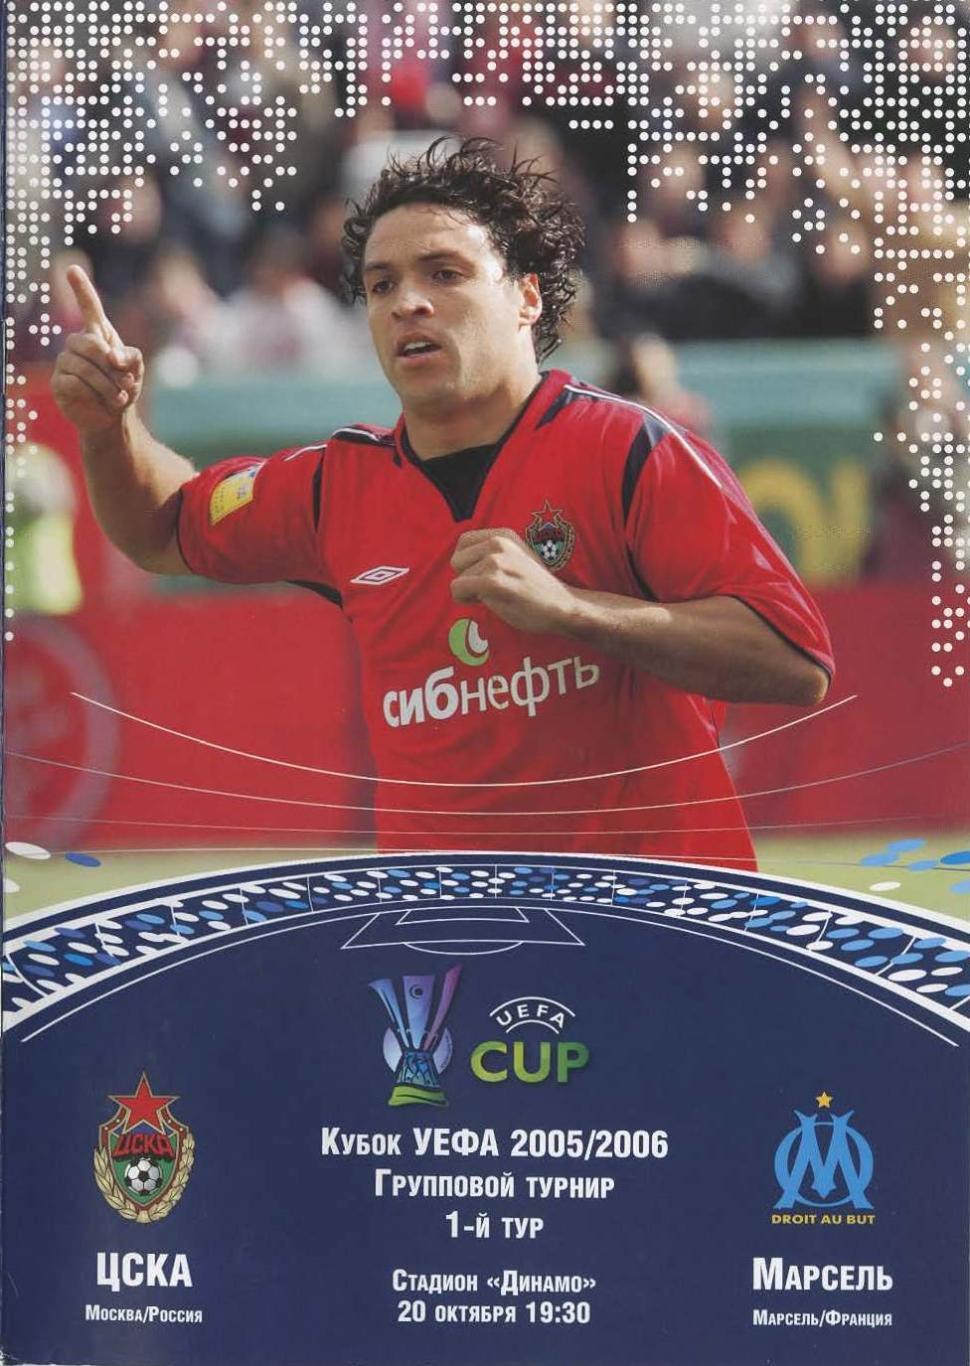 Программка матча ЦСКА - Марсель Франция. 20 октября 2005 г. Кубок УЕФА.